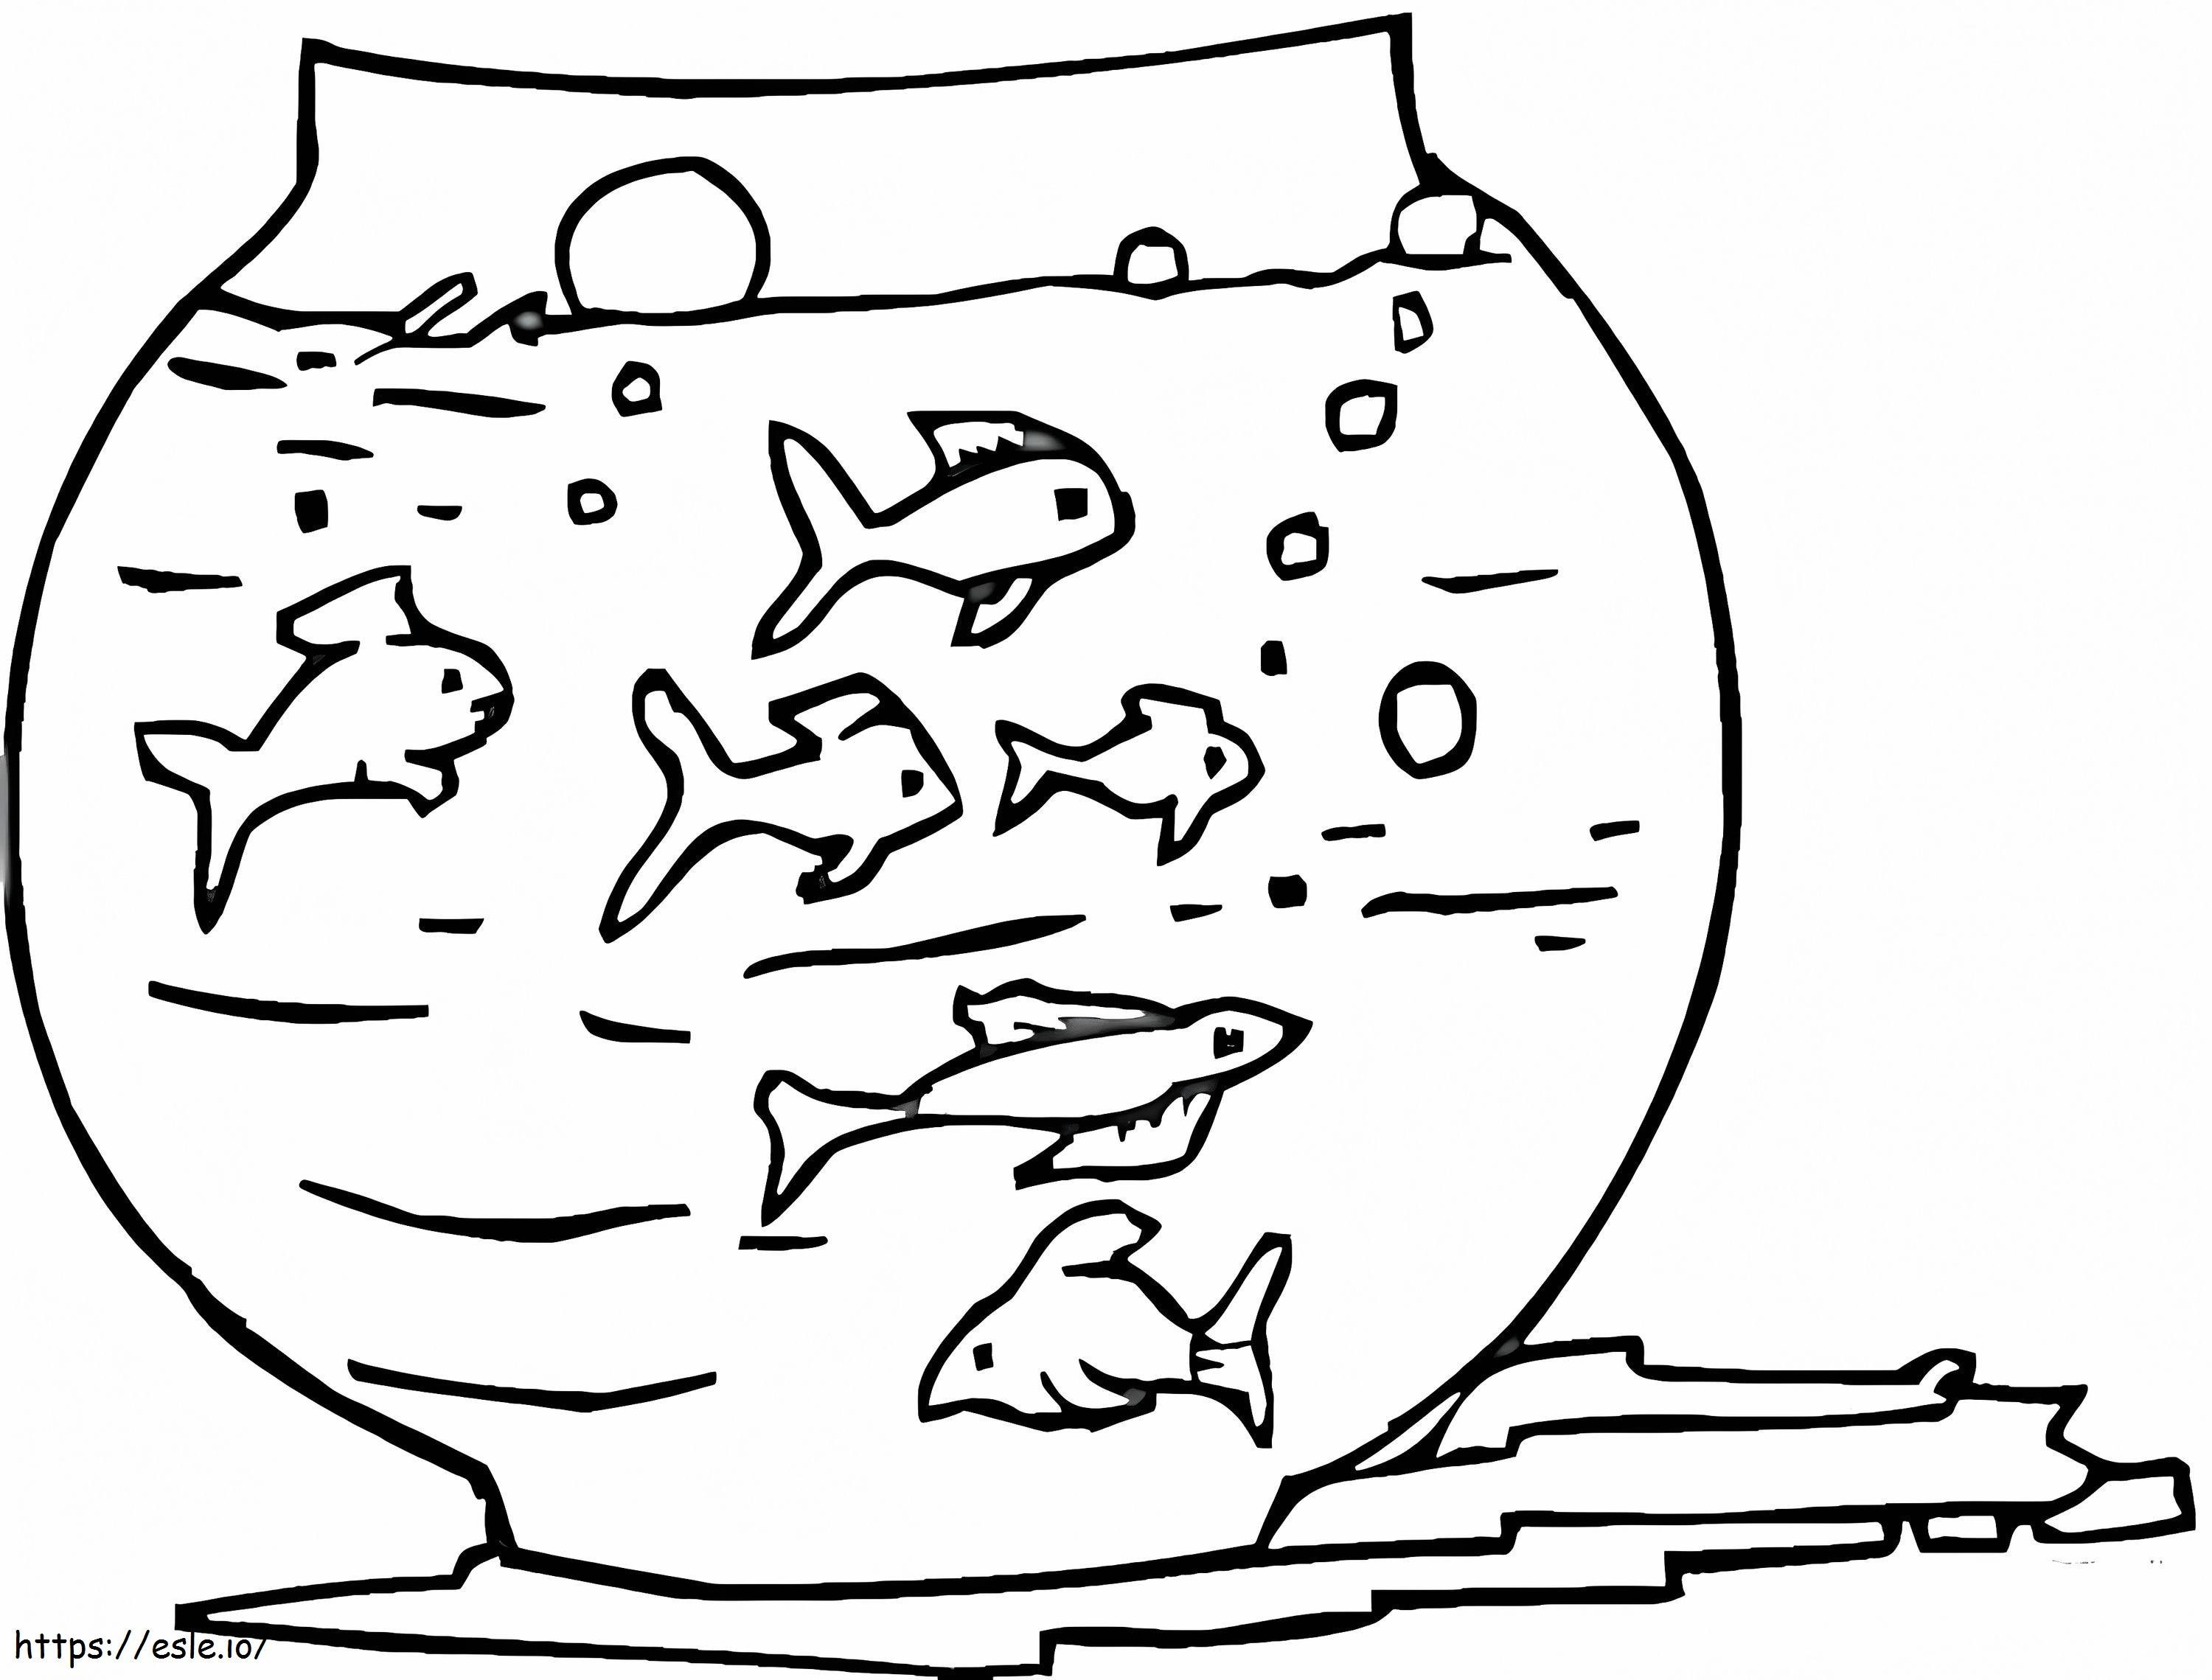 Fish Tank Printable coloring page